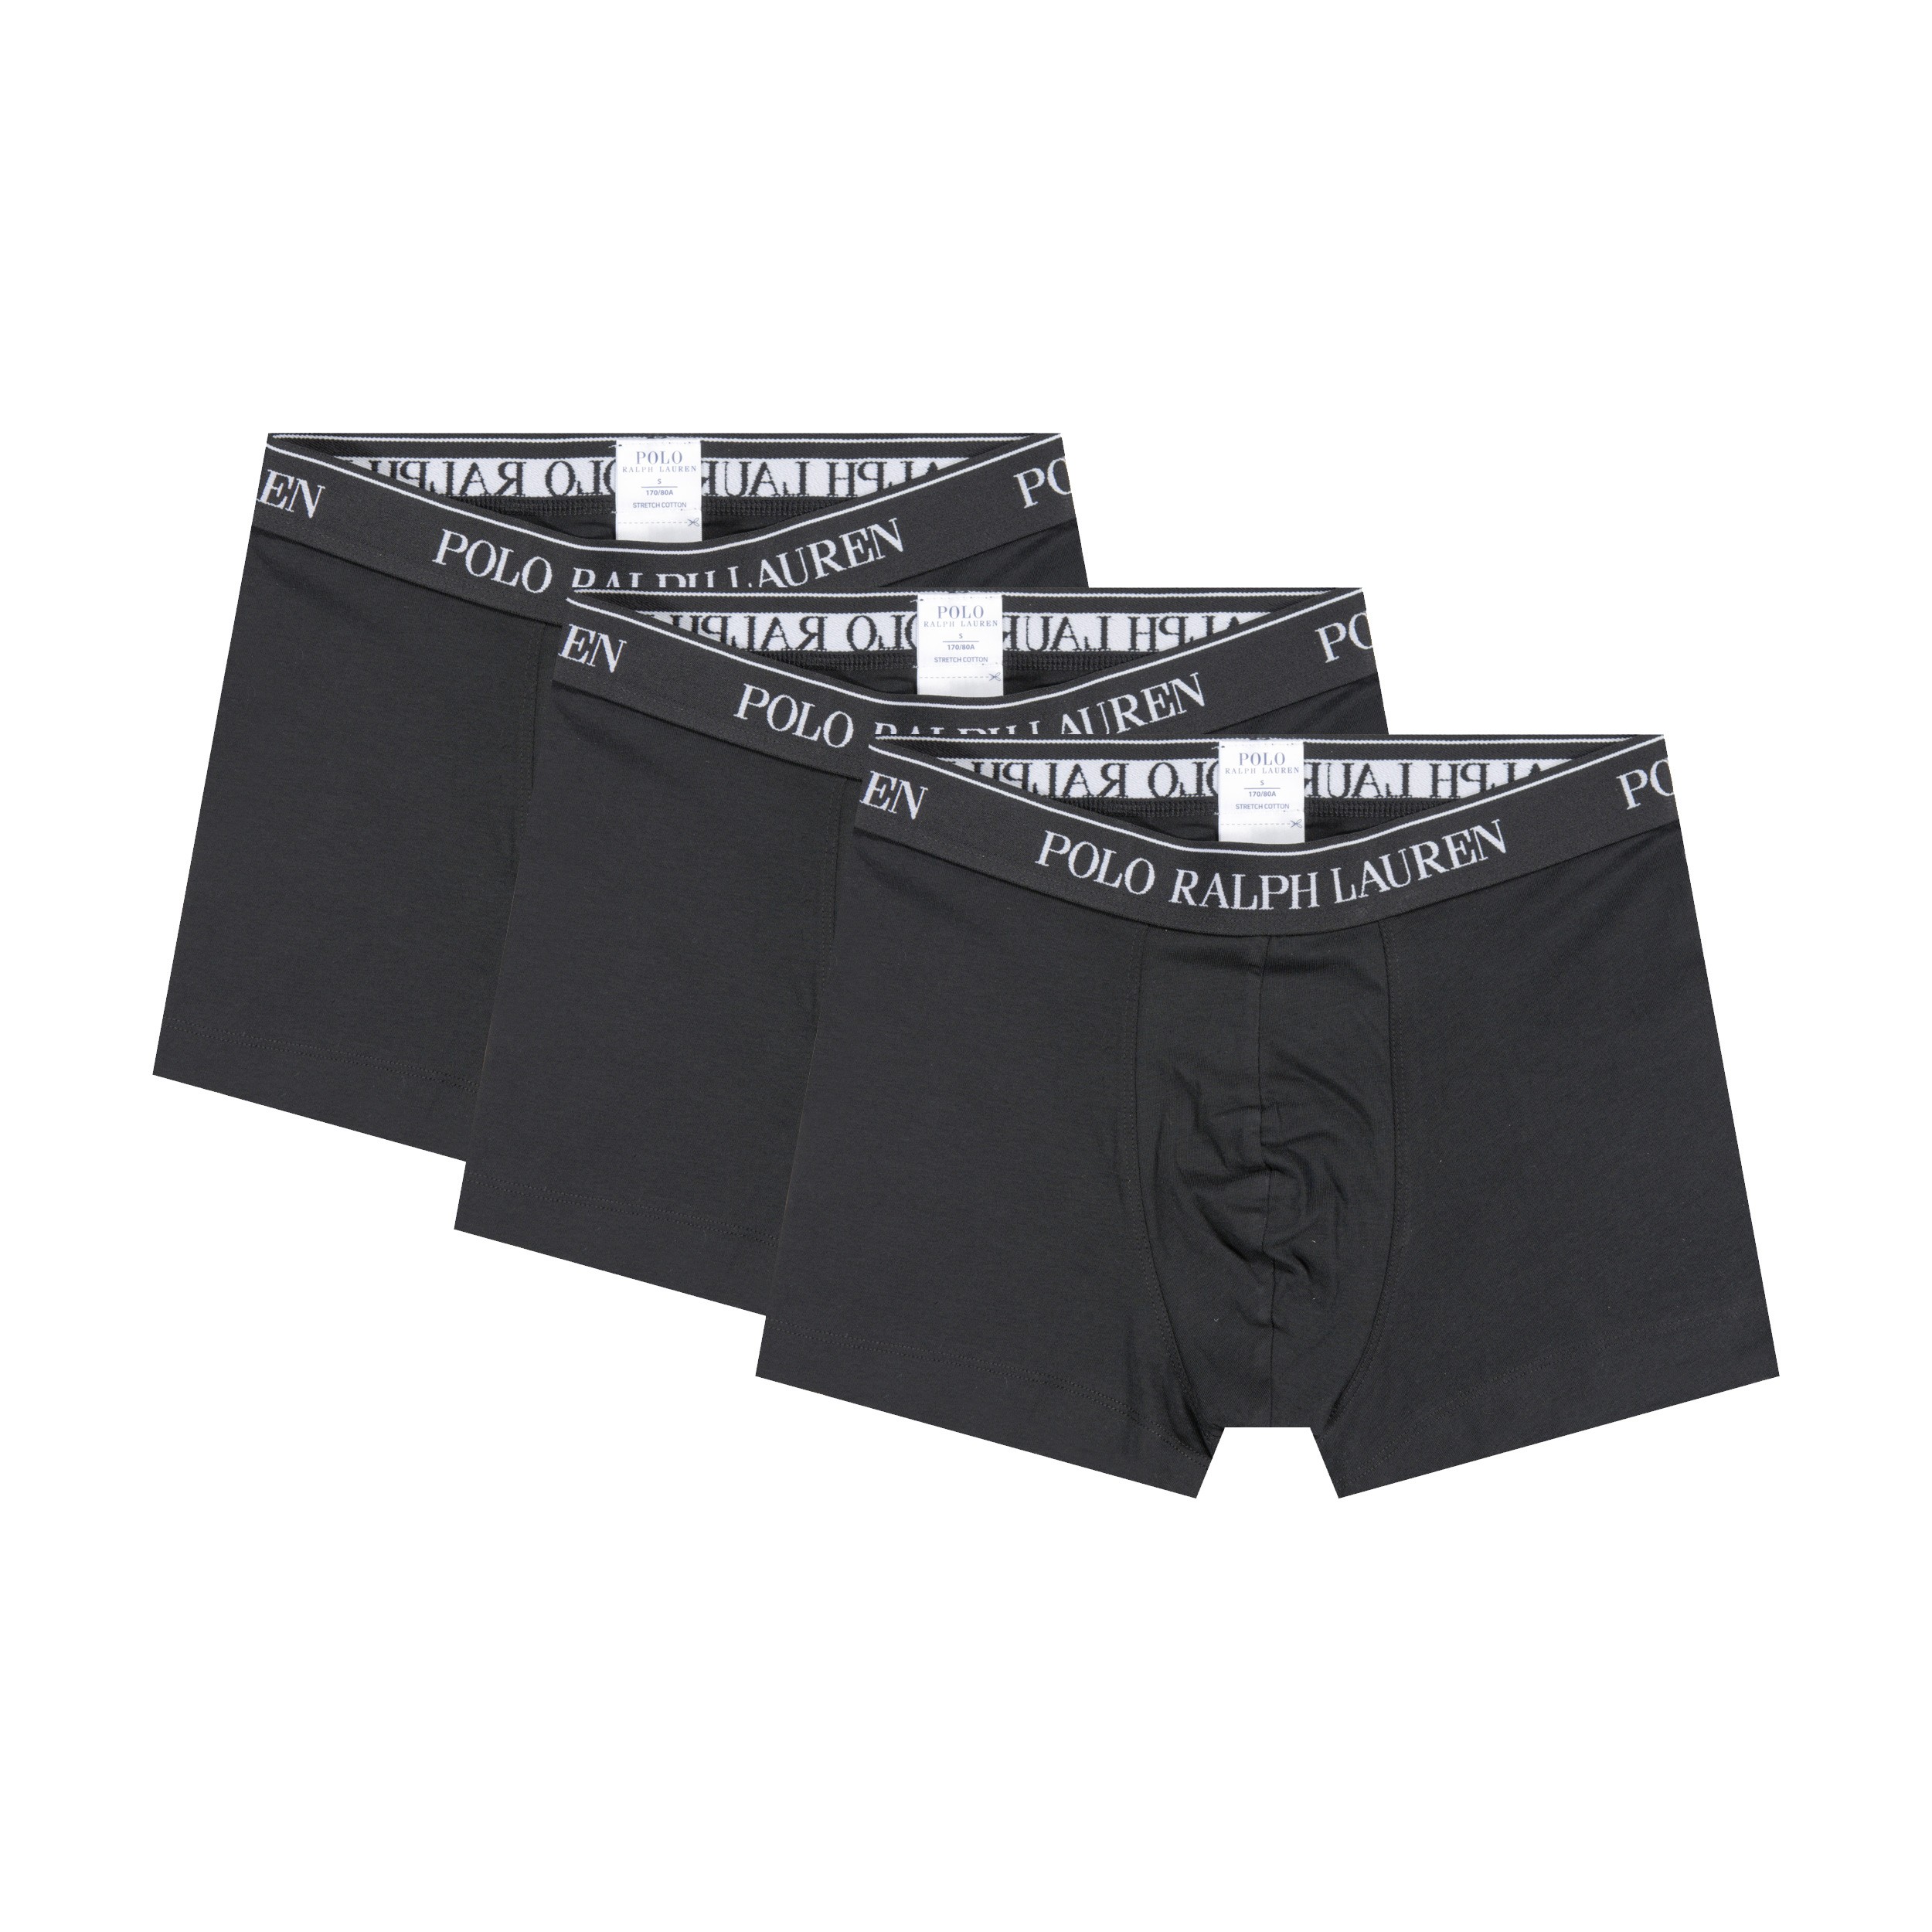 https://www.pockets.co.uk/media/catalog/product/cache/afca9a4301a4f957e27126911791b579/r/a/ralphlauren_aw20_underwear_3pack_black_1_4.jpg